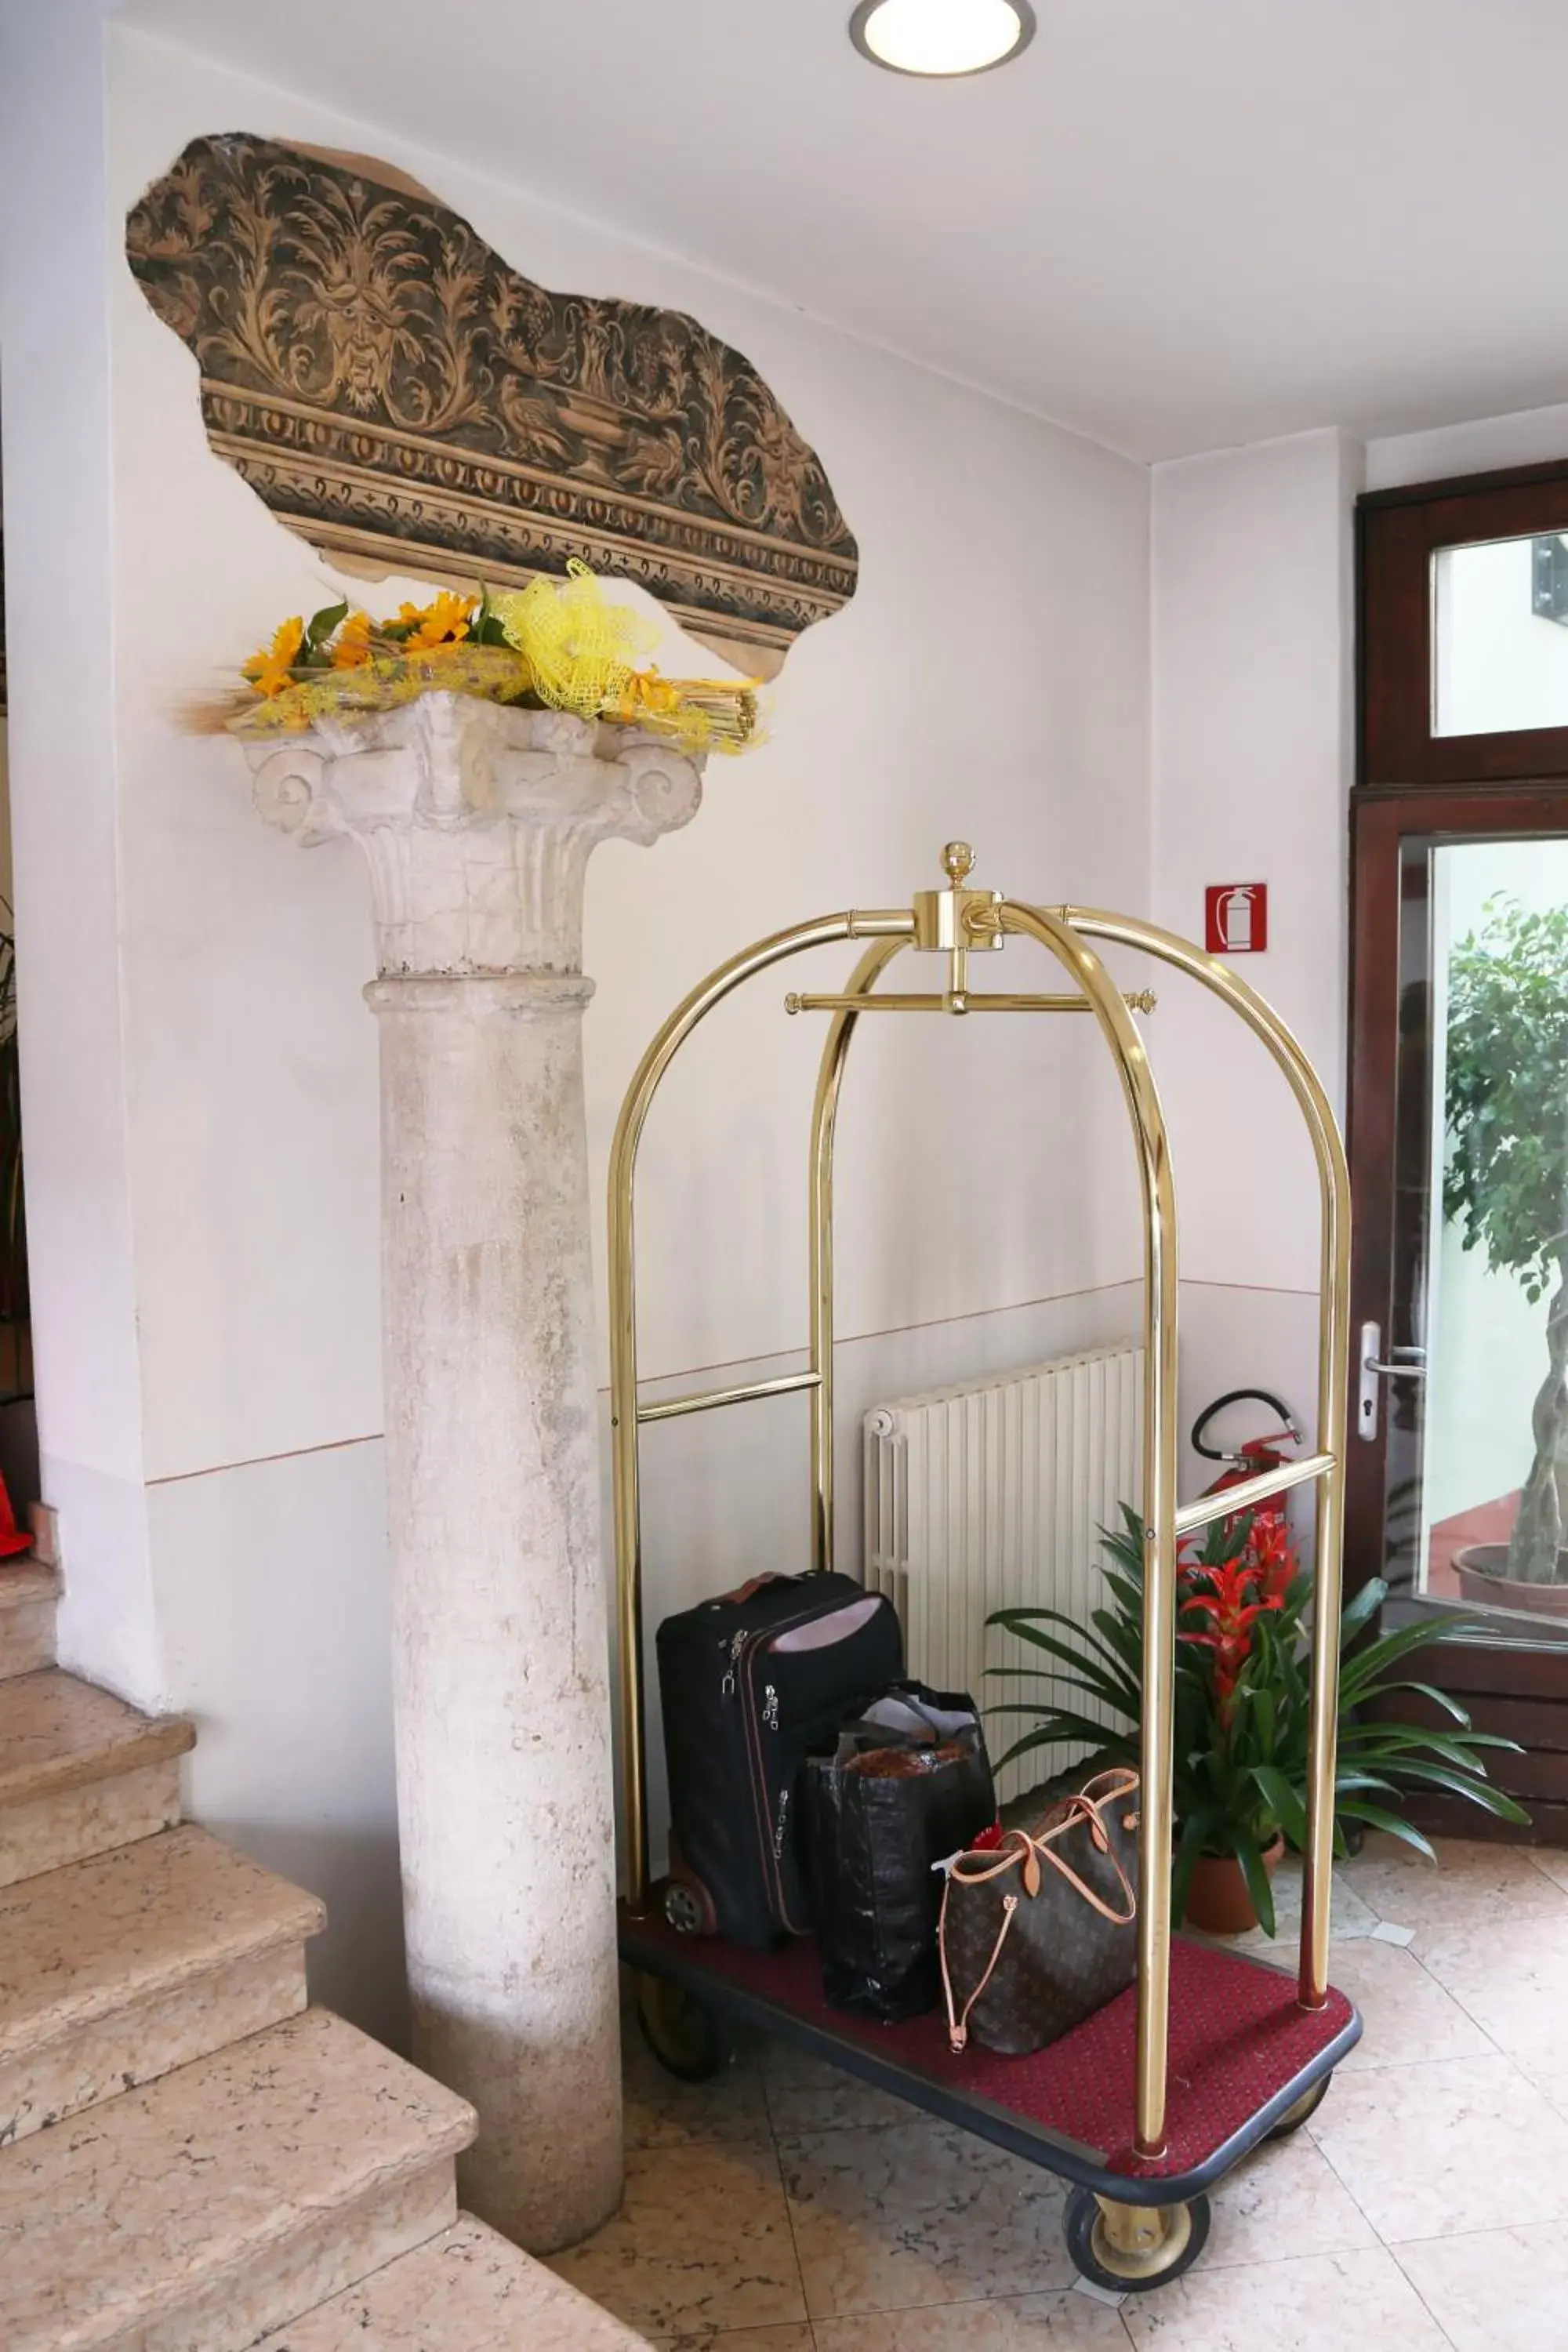 Decorative detail in Hotel Mantegna Stazione